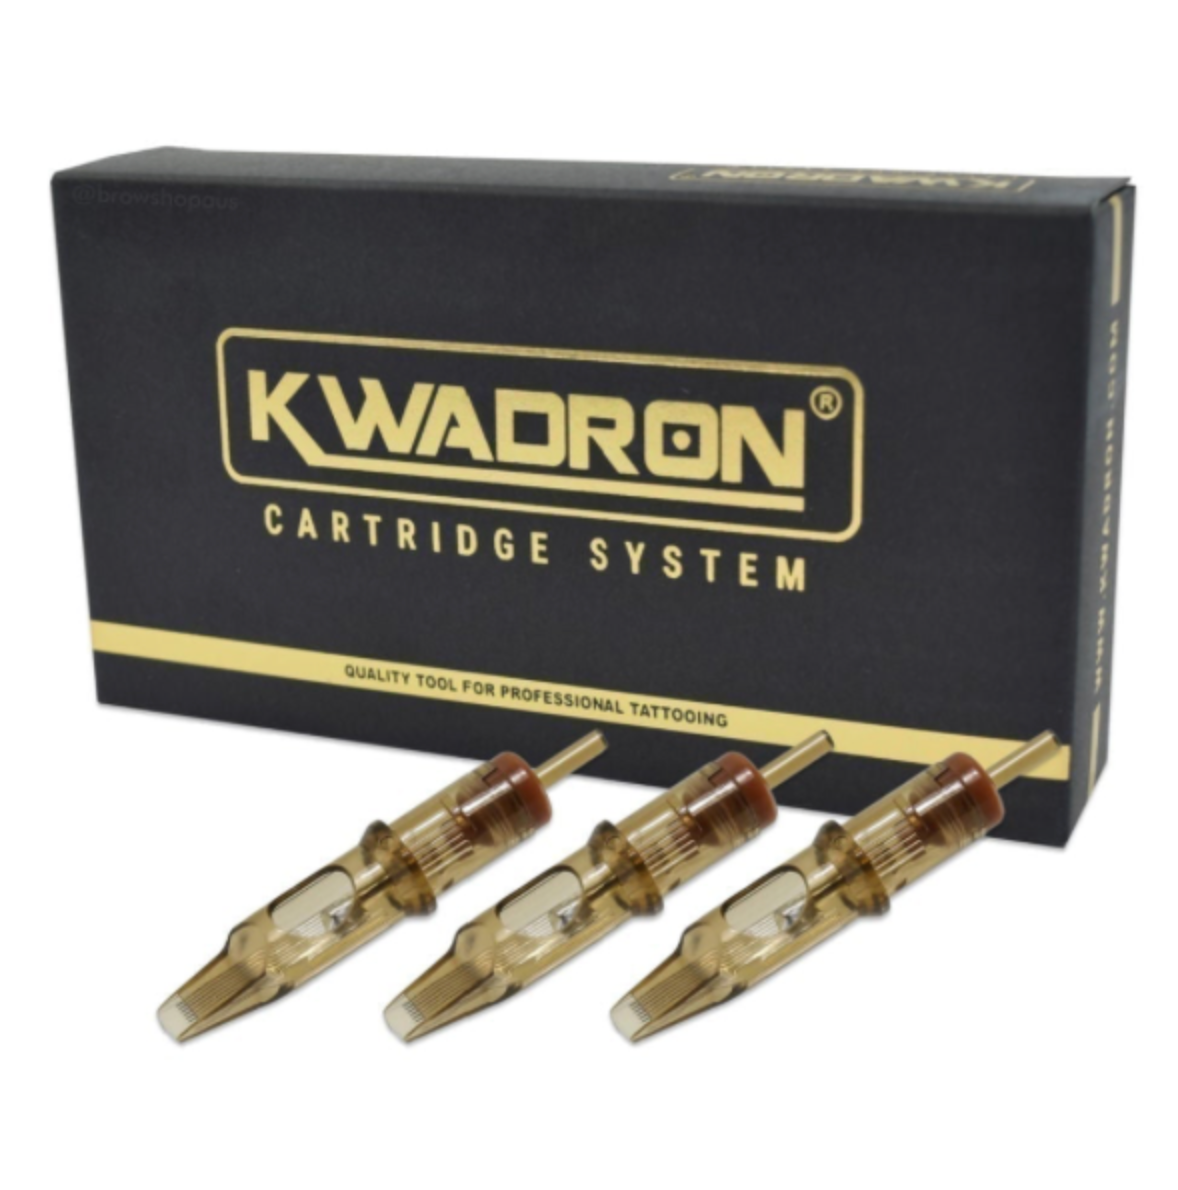 Kwadron Cartridge Needles - 11 Tight Liner Long Taper - 30/11RLLT